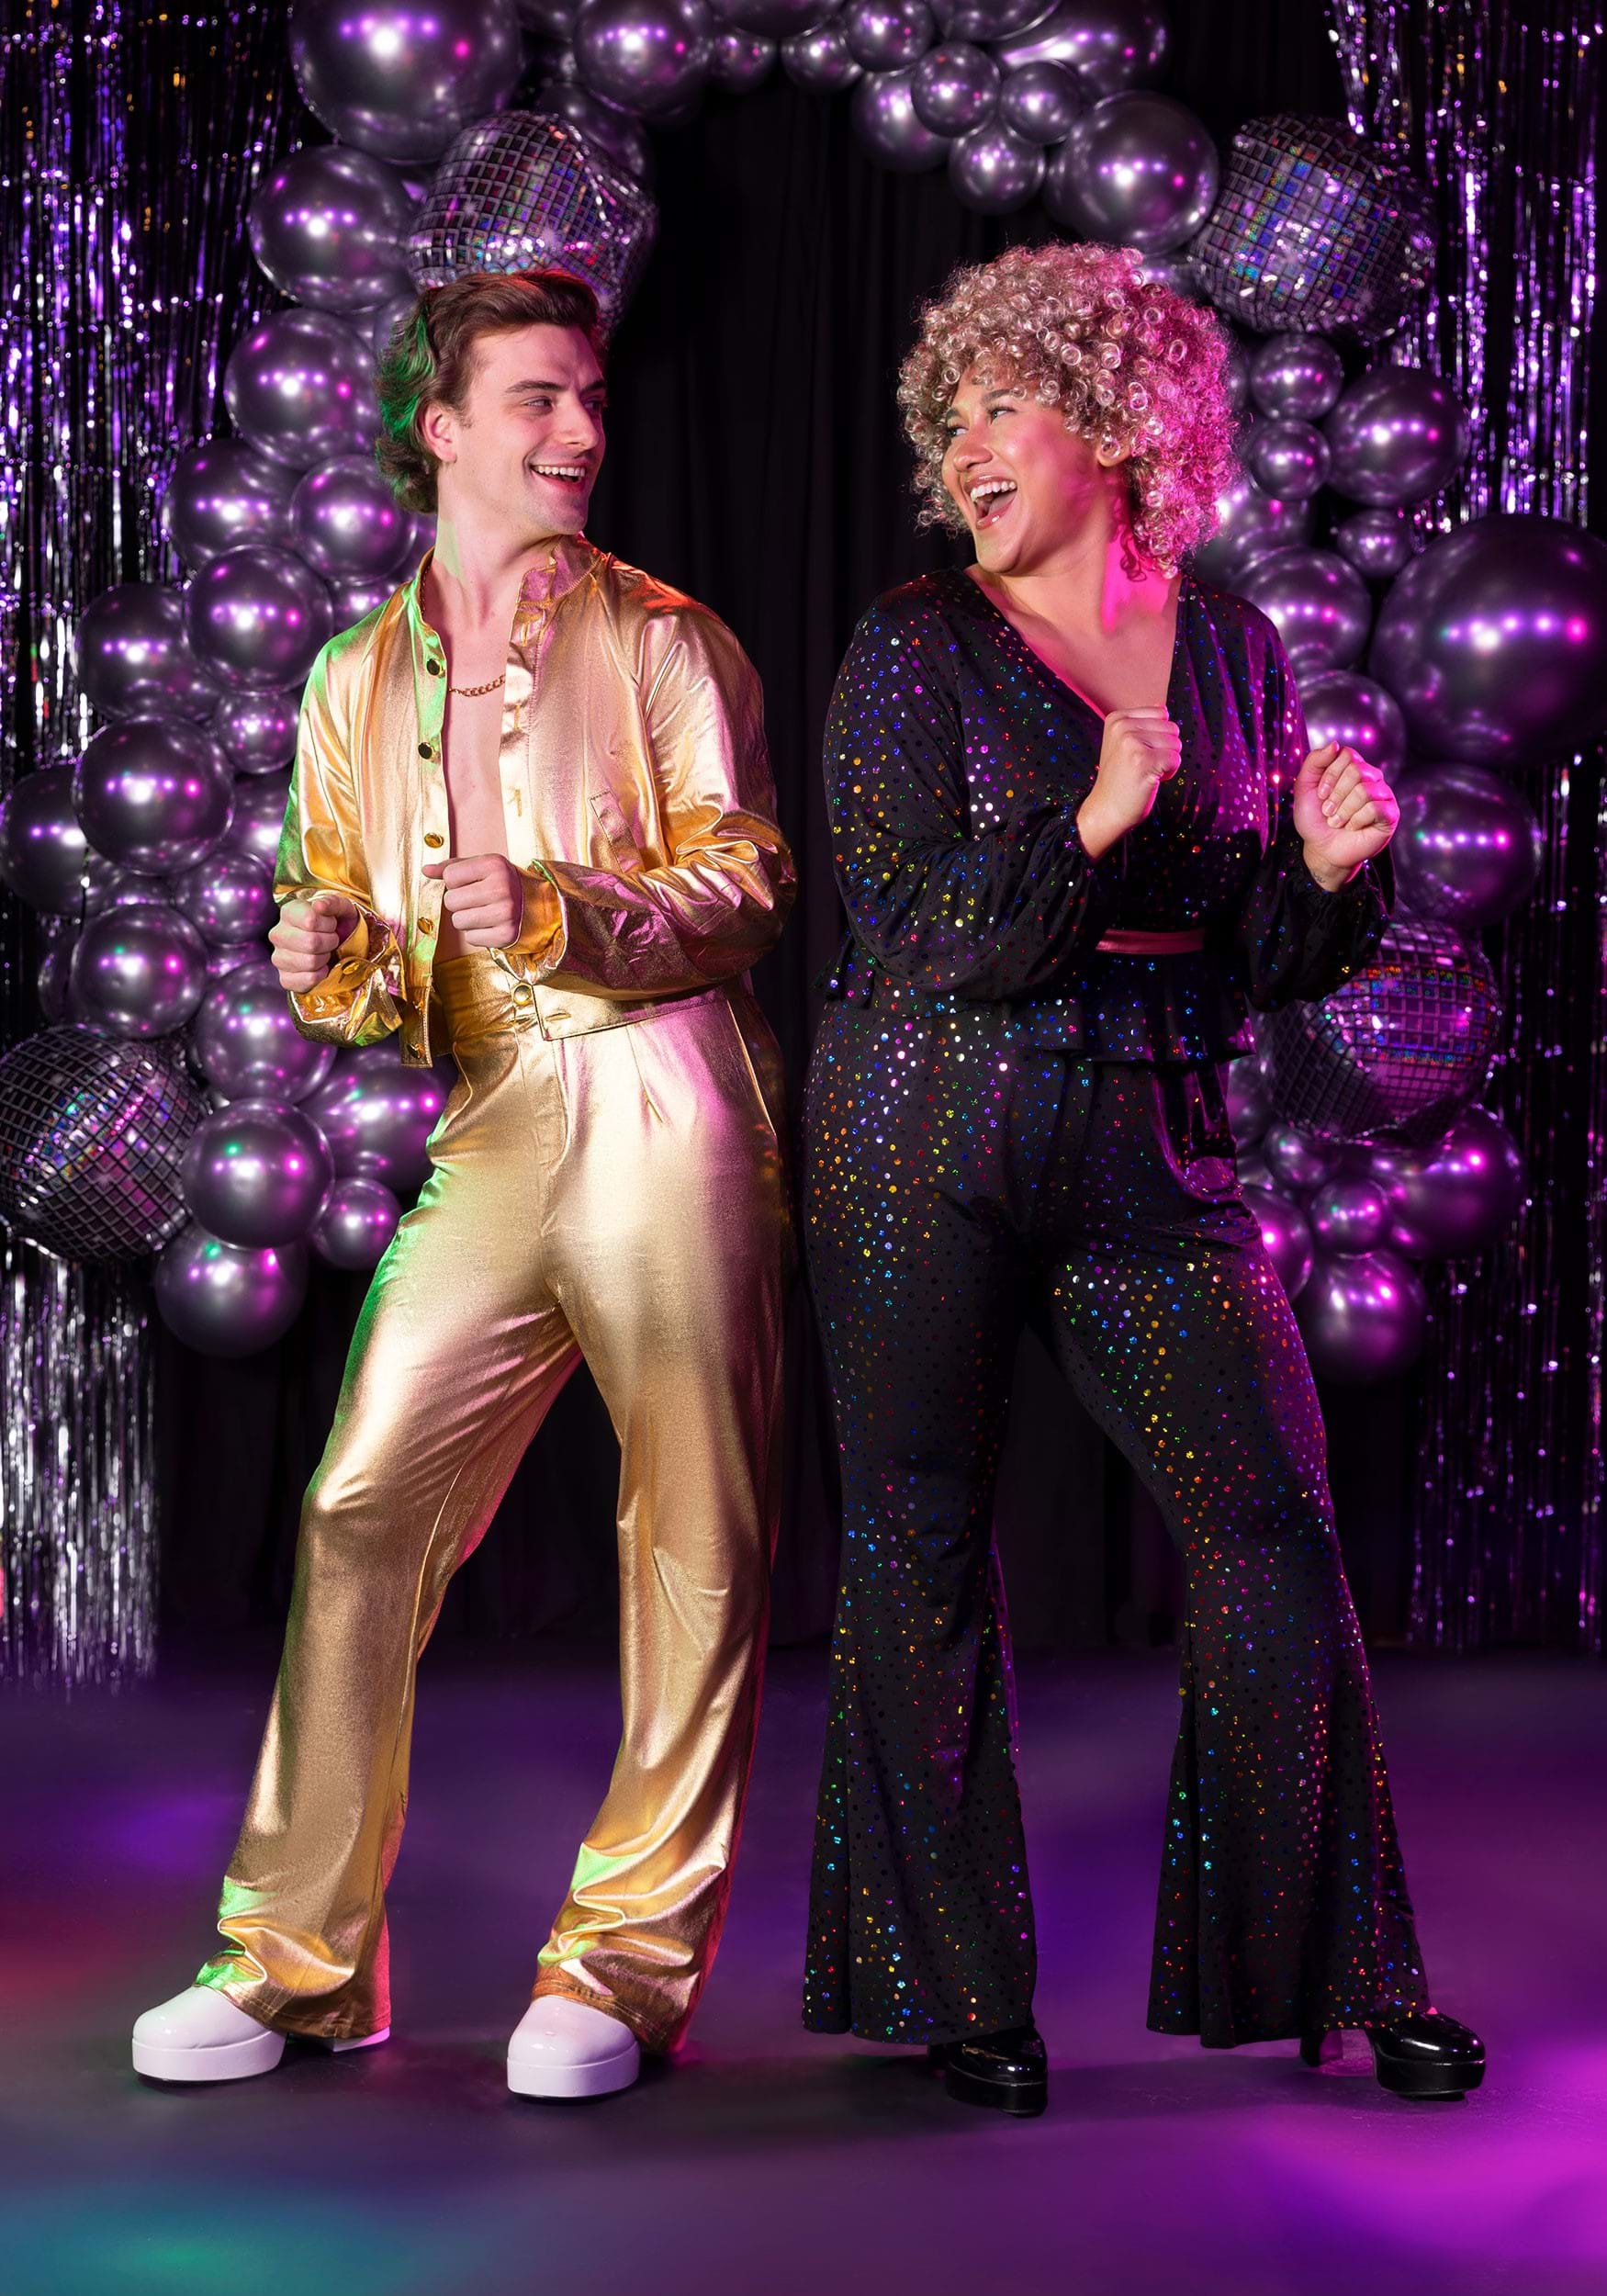 Gold 70S Metallic Womens Adult Disco Costume Bell Bottoms Pants-L/Xl